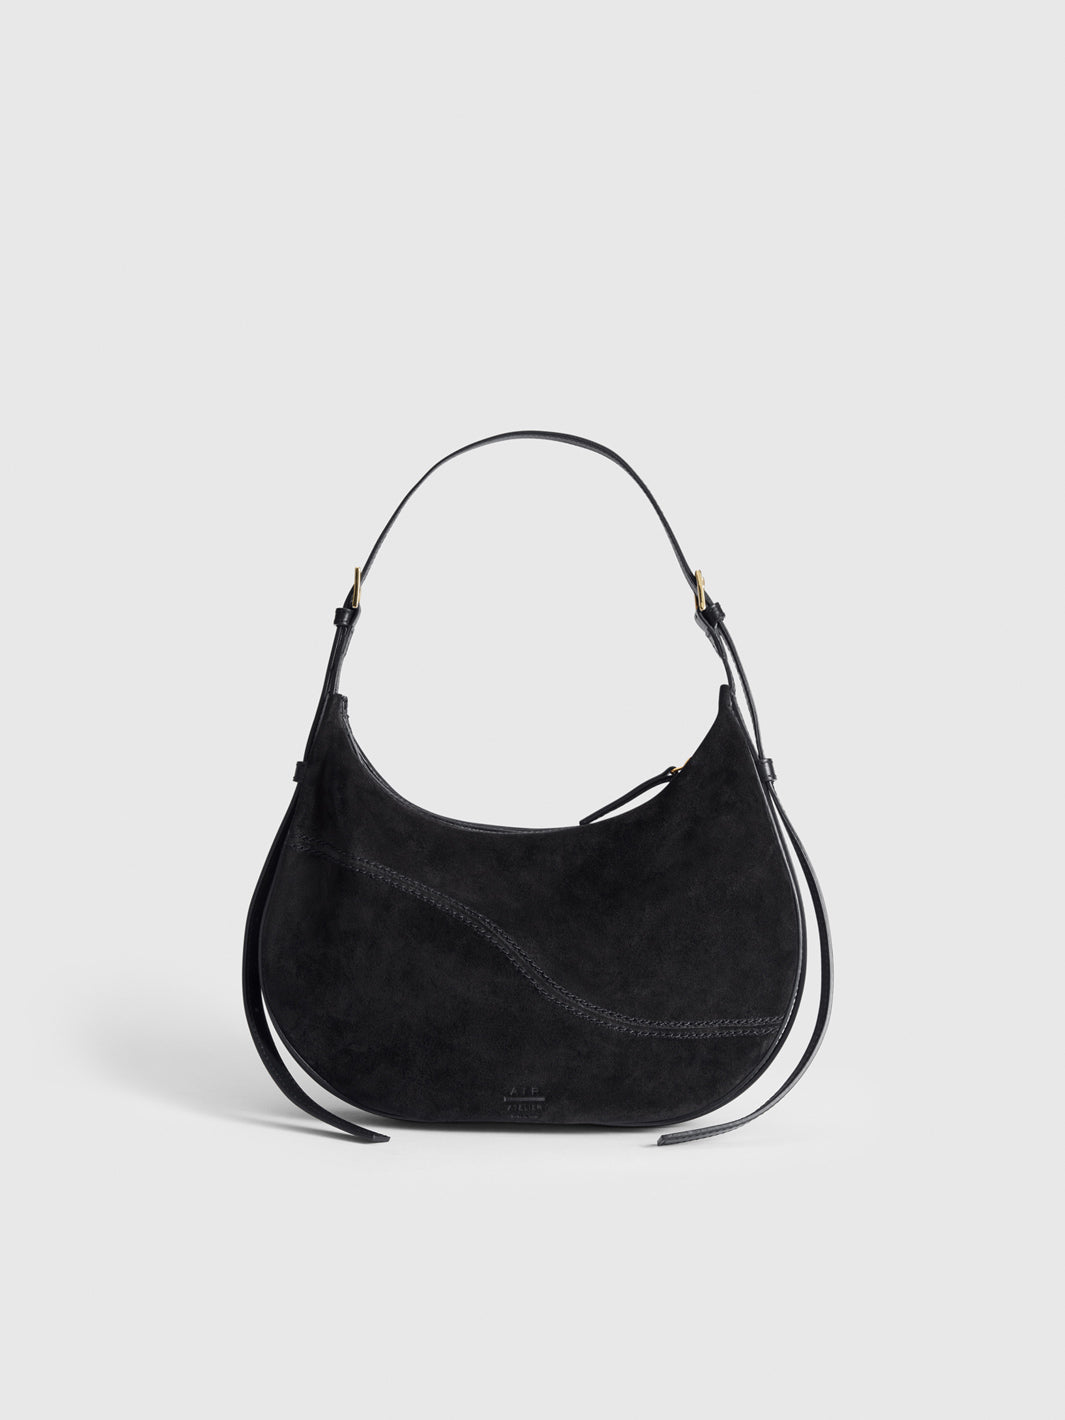 Liveri Black Suede/Leather Small hobo bag